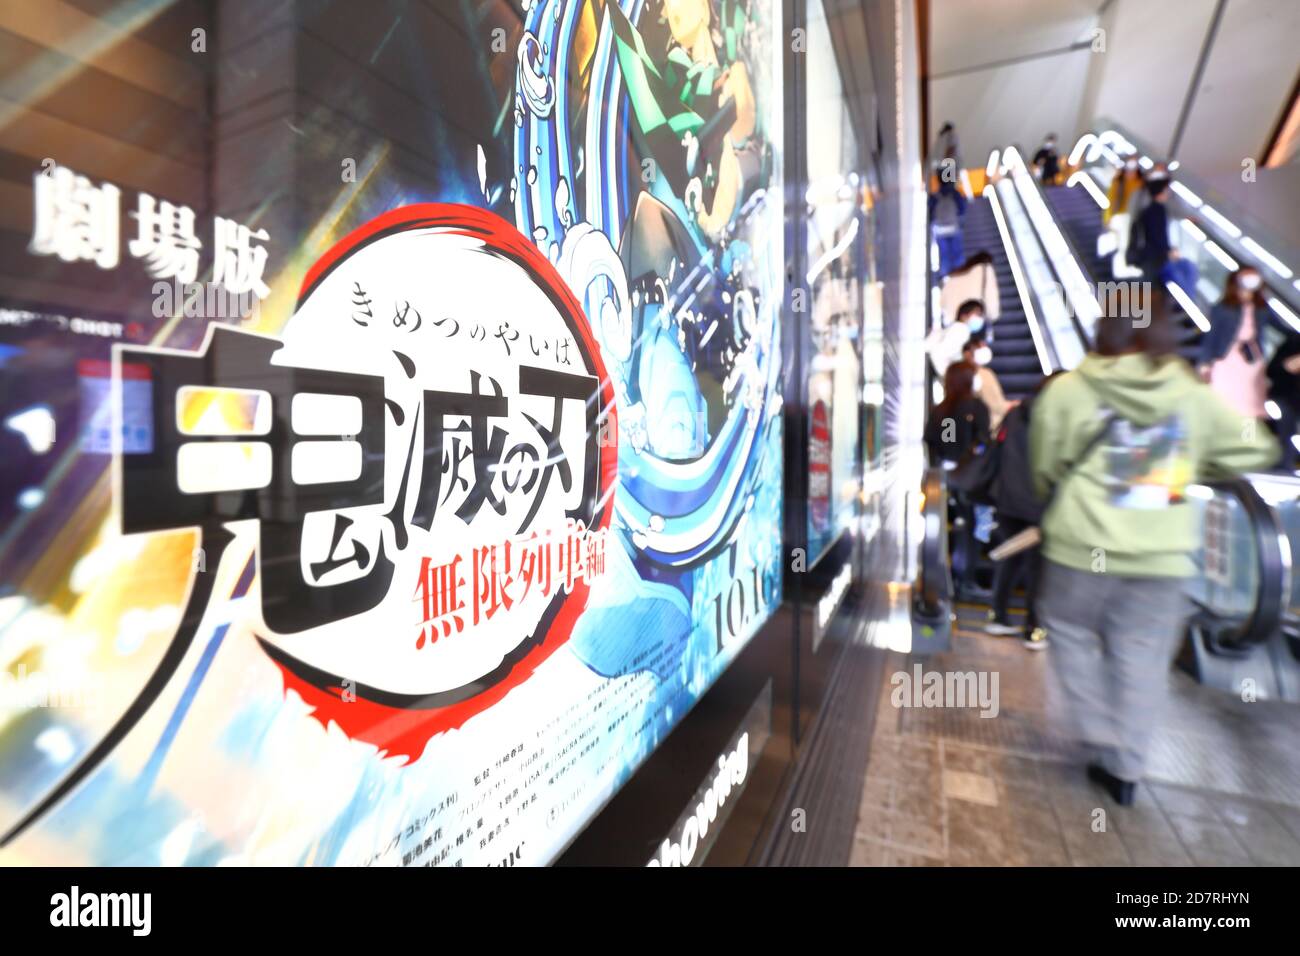 People walk past a poster for an animated film based on popular Japanese manga 'Demon Slayer: Kimetsu no Yaiba the Movie: Infinite Train' on display outside a movie theater in Tokyo, Japan on October 23, 2020. Credit: Naoki Nishimura/AFLO/Alamy Live News Stock Photo